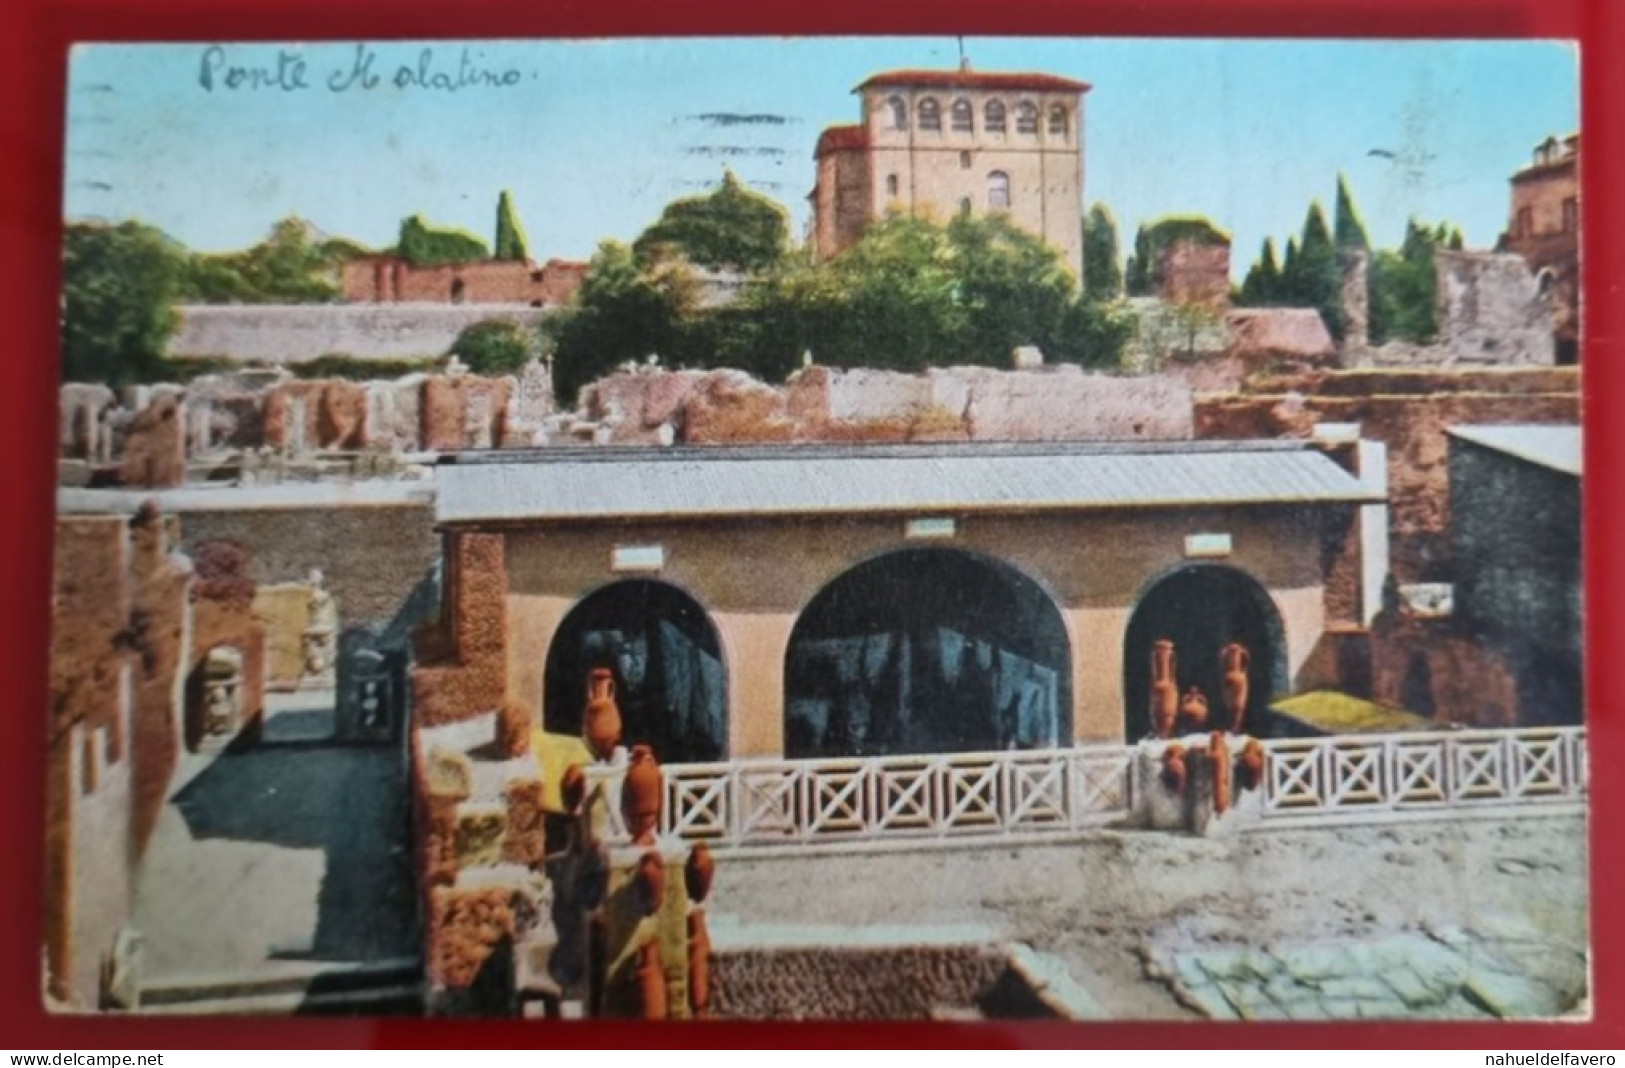 CPA Circulée 1932 - ITALIA, ROMA - MONTE PALATINO - CASA DI LIVIA - Parks & Gardens